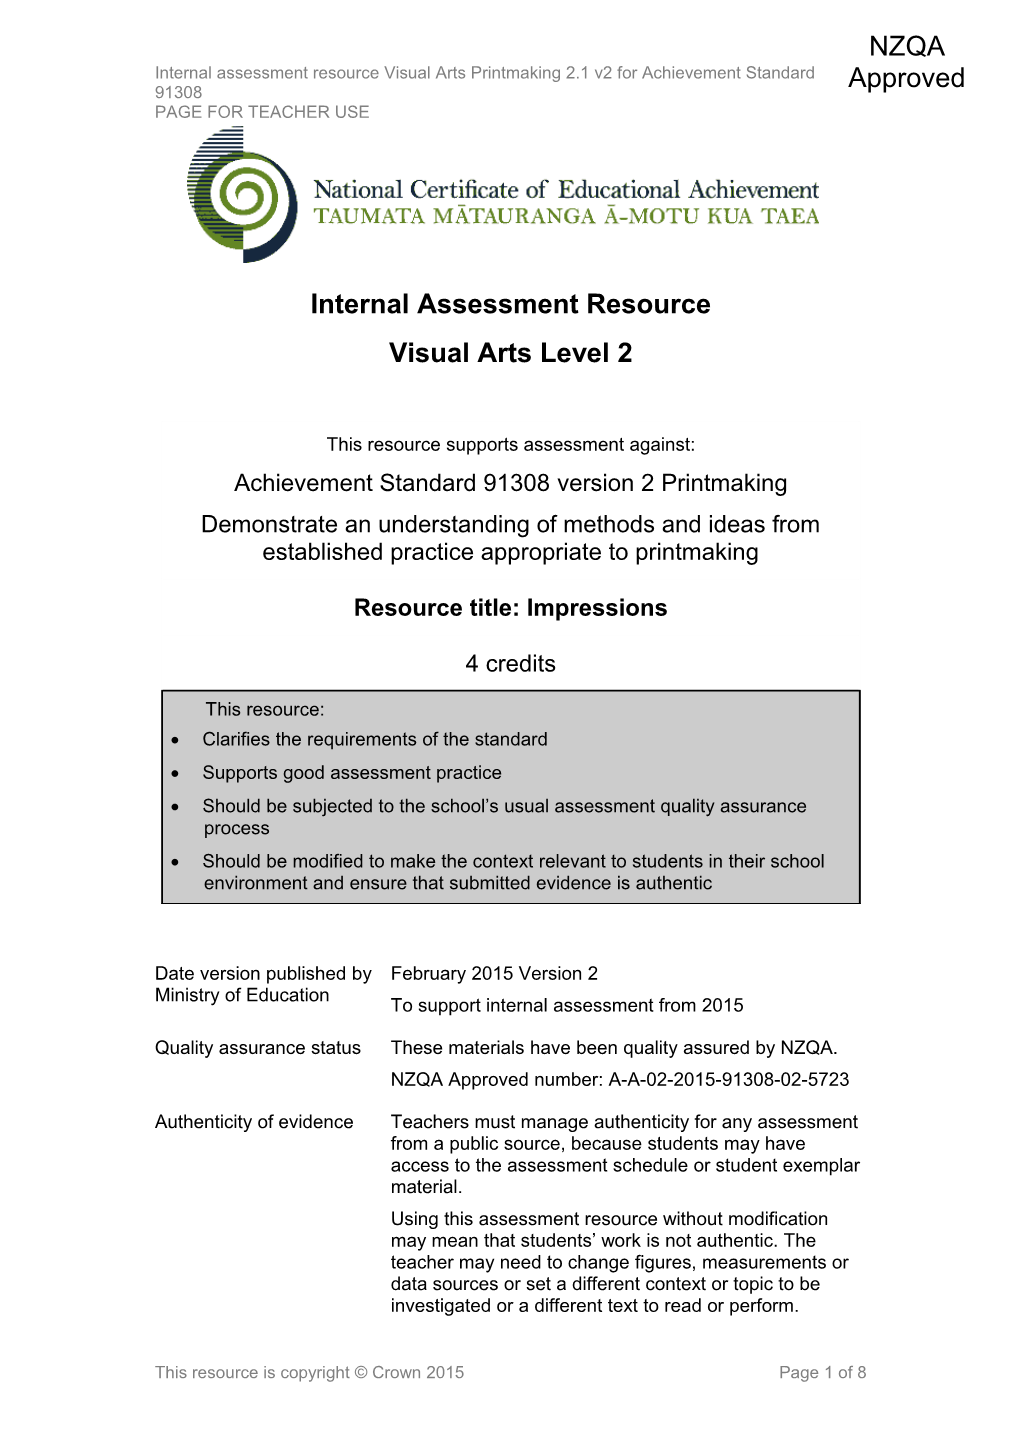 Level 2 Visual Arts Internal Assessment Resource